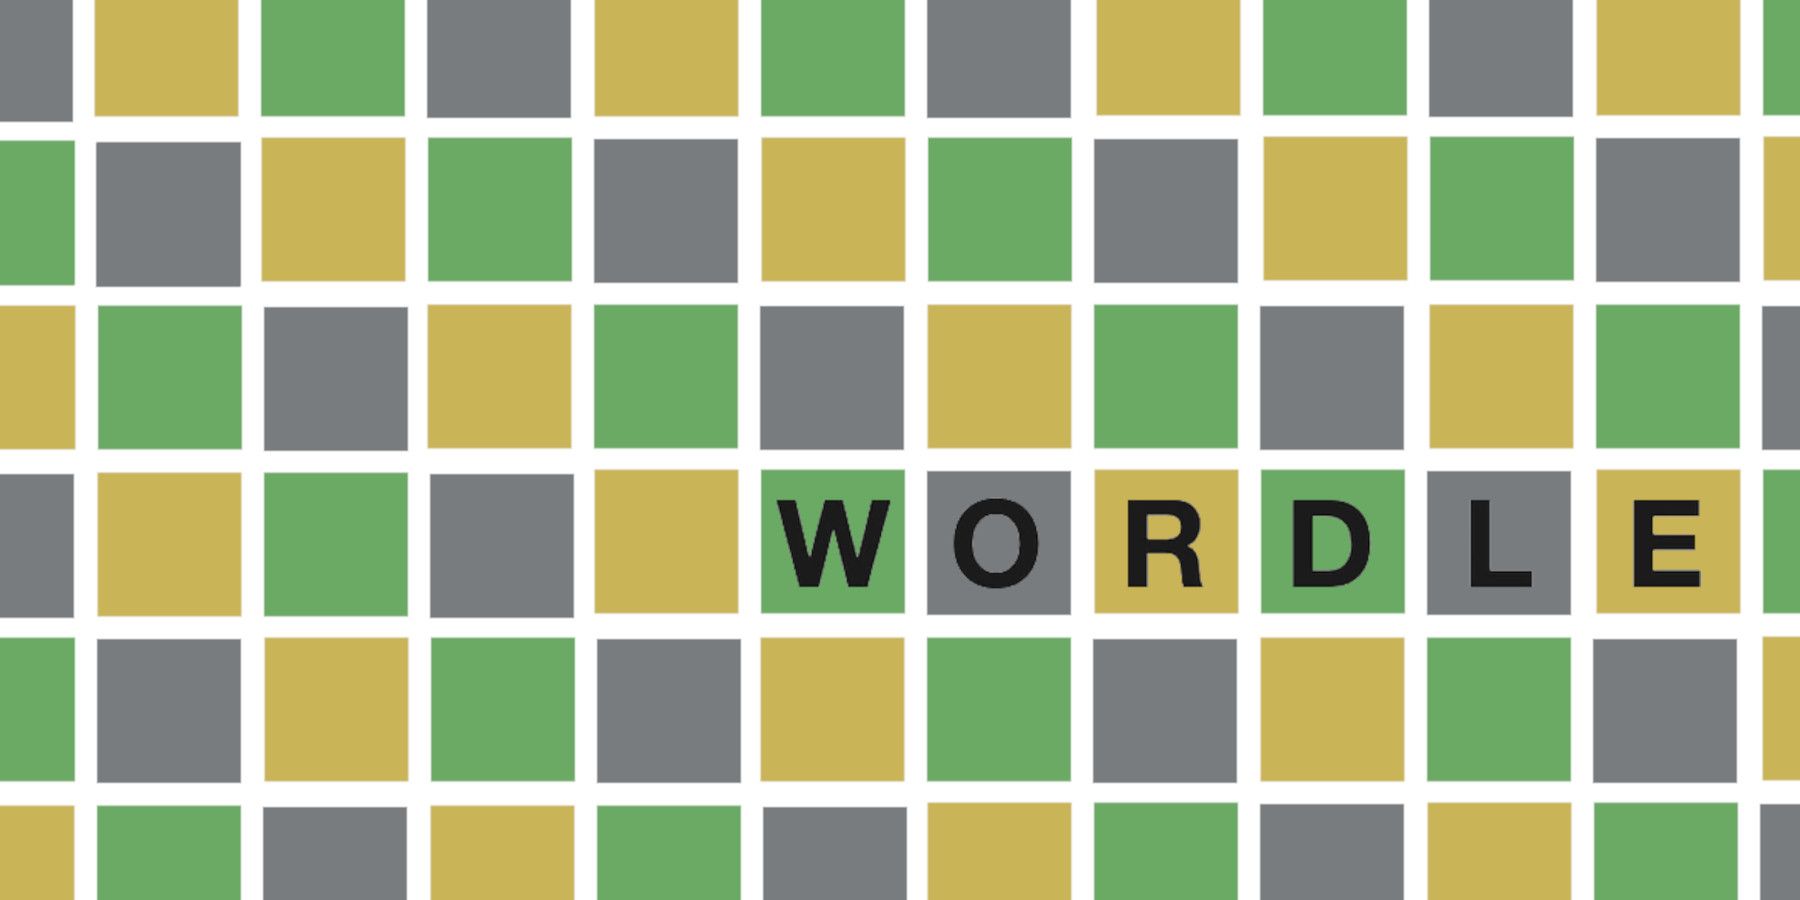 Jawapan Wordle 240 untuk 14 Februari 2022